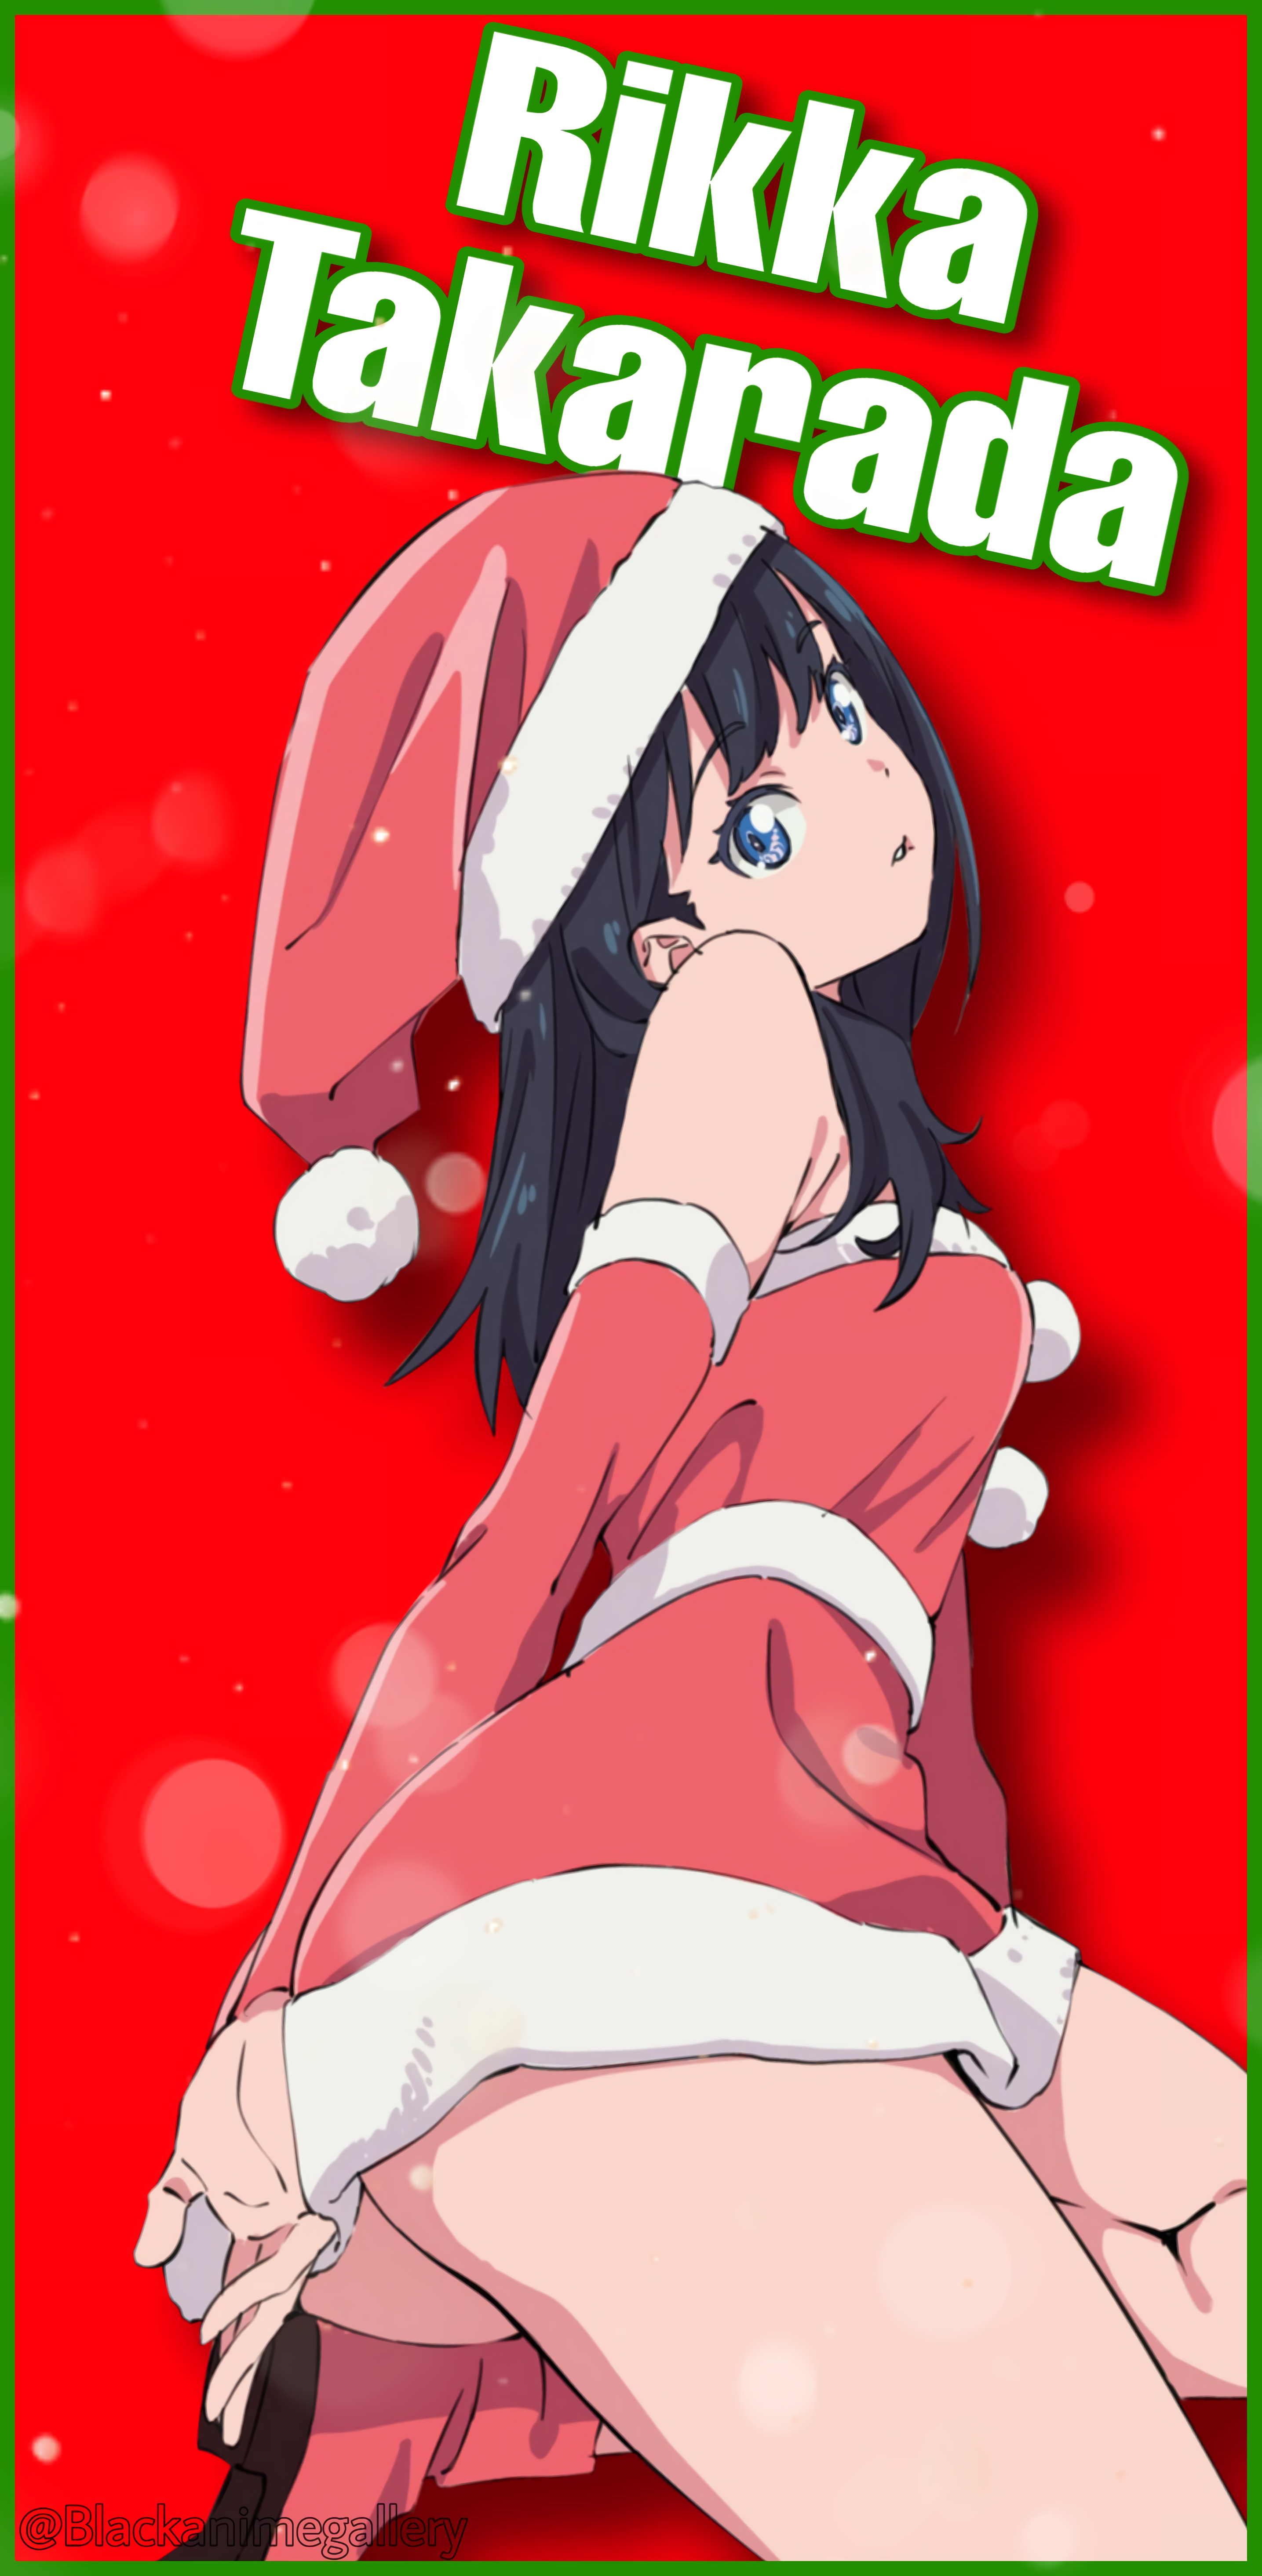 Takarada Rikka Anime Red Christmas Anime Girls Santa Girl SSSS GRiDMAN 2870x5860